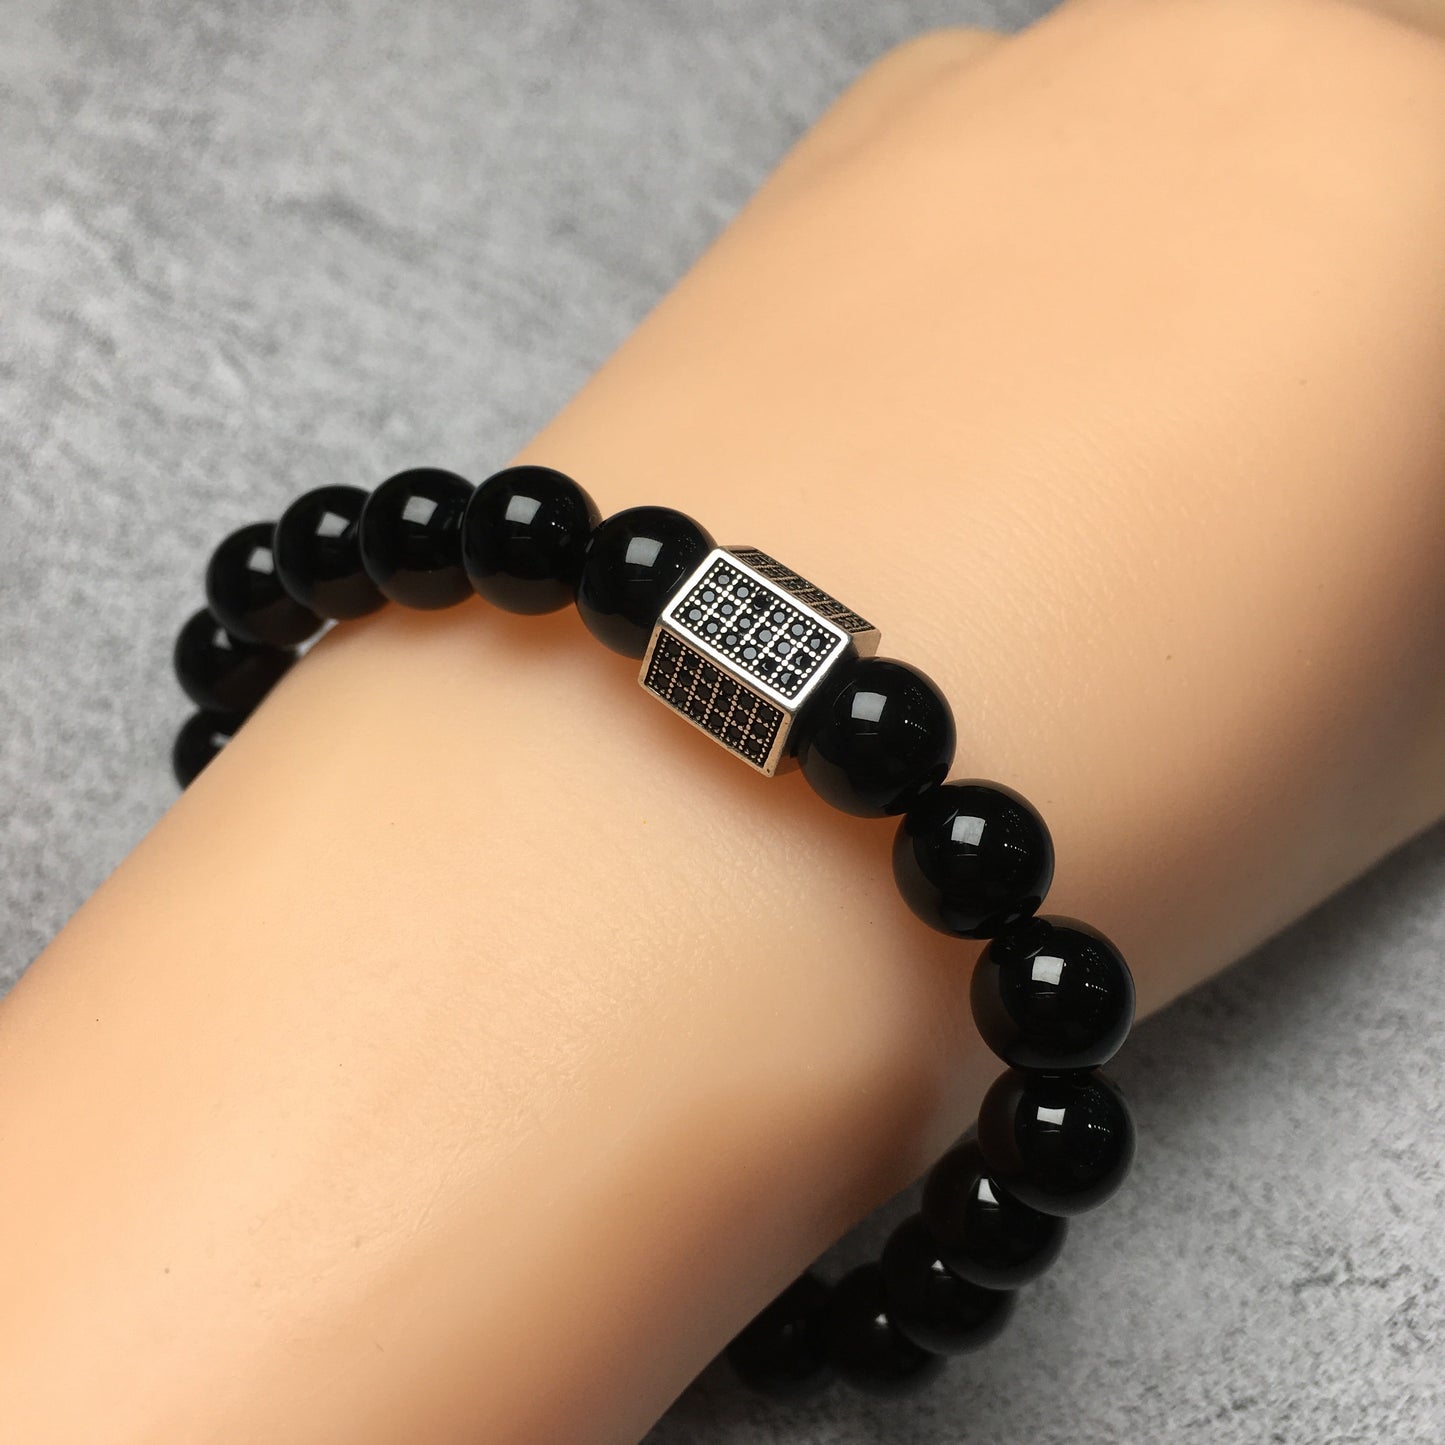 Black Striped CZ Charms Black Onyx Stone Beads Elastic Rope Handmade Bracelets